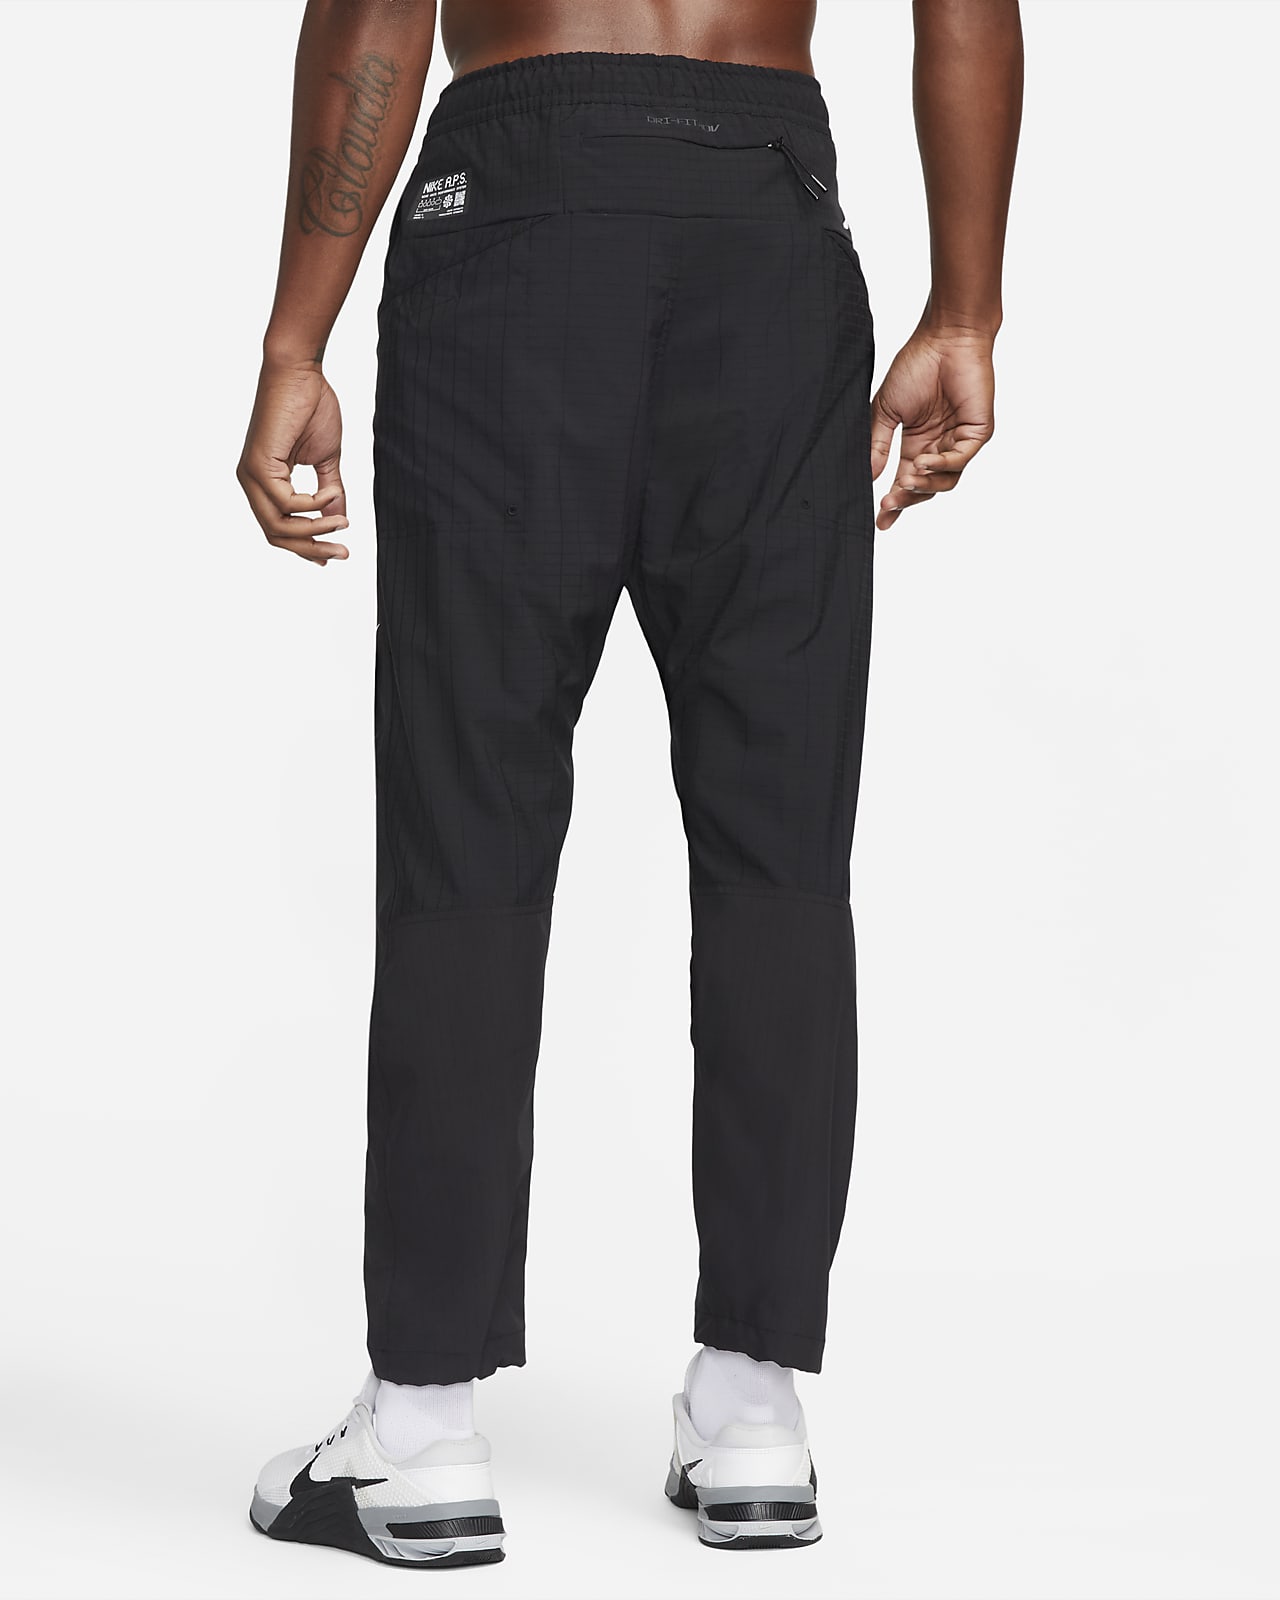 Nike Dri-FIT ADV A.P.S. Men's Woven Fitness Pants.